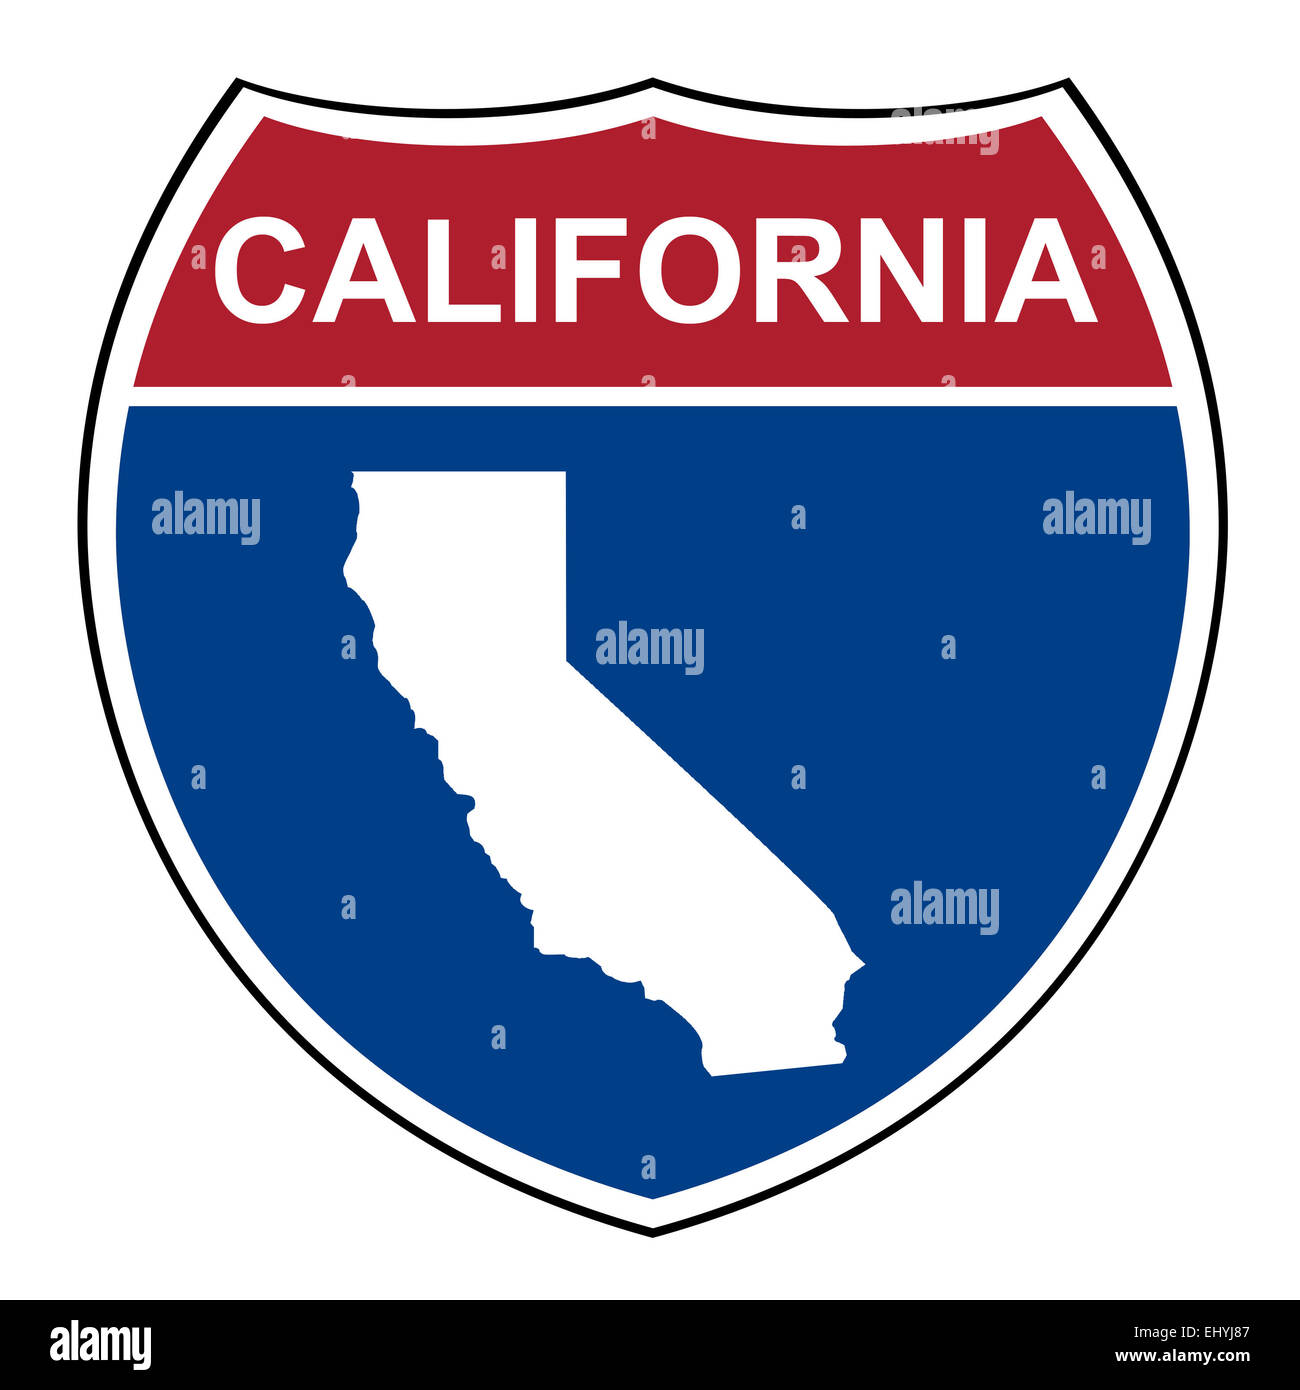 California American autopista interestatal escudo de carretera aislado sobre un fondo blanco. Foto de stock